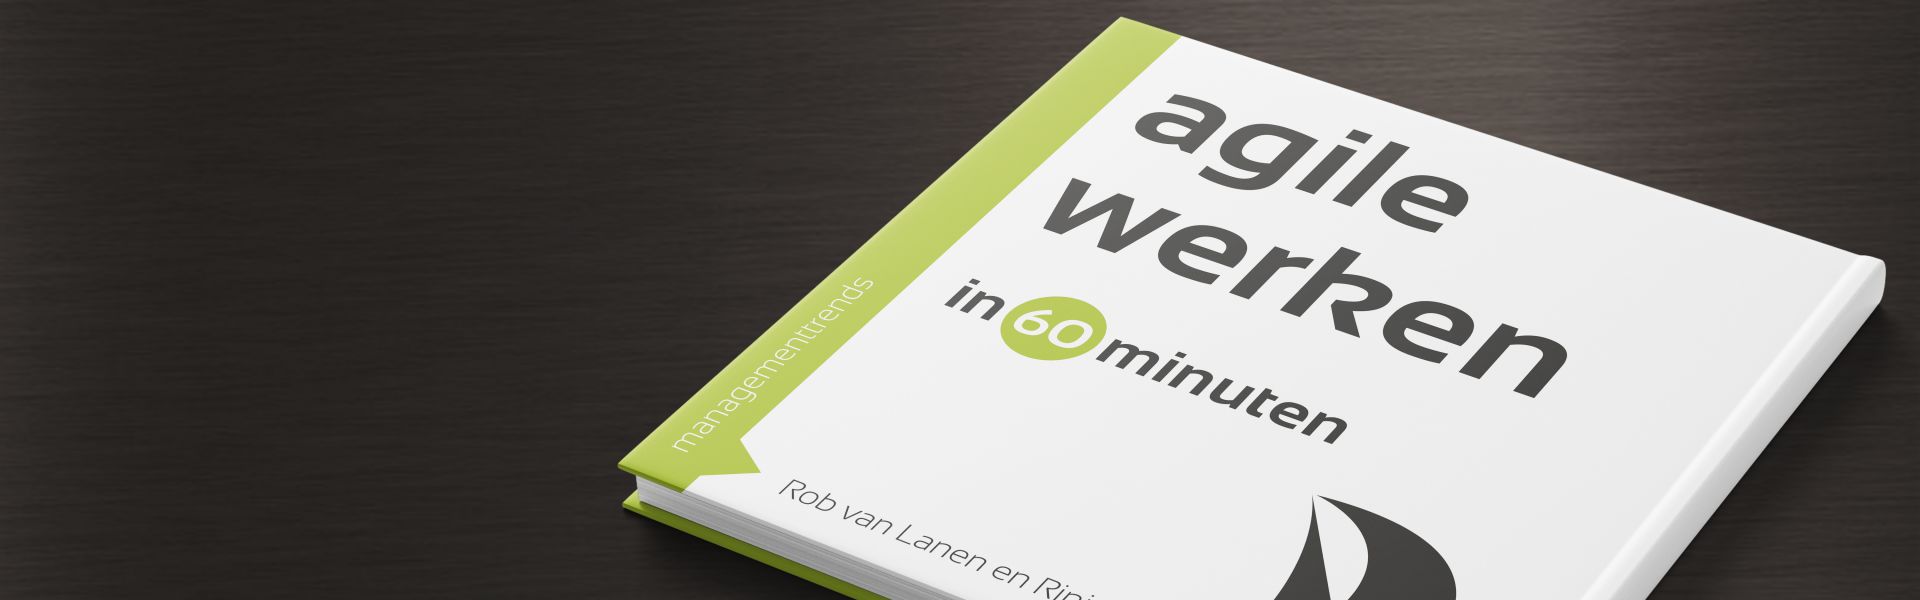 Agile werken in 60 minuten